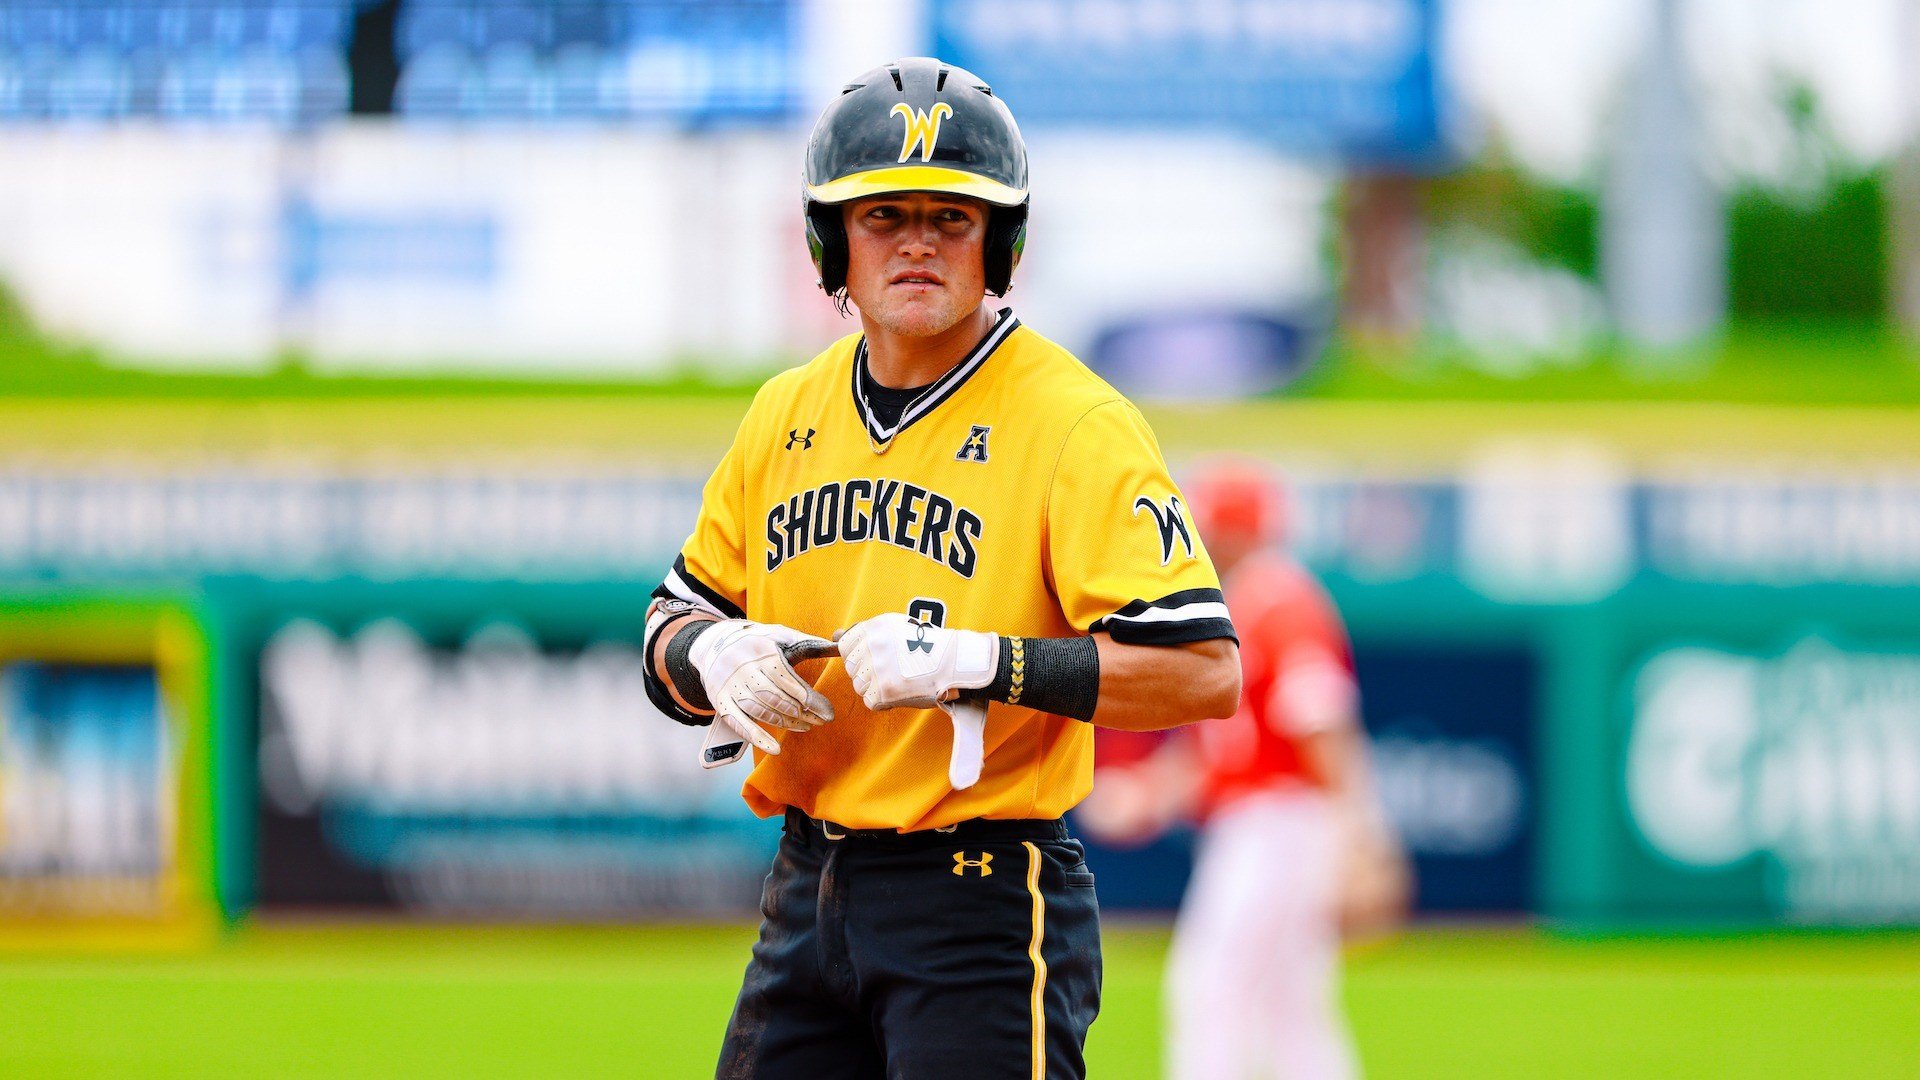 Alec Bohm - Baseball - Wichita State Athletics